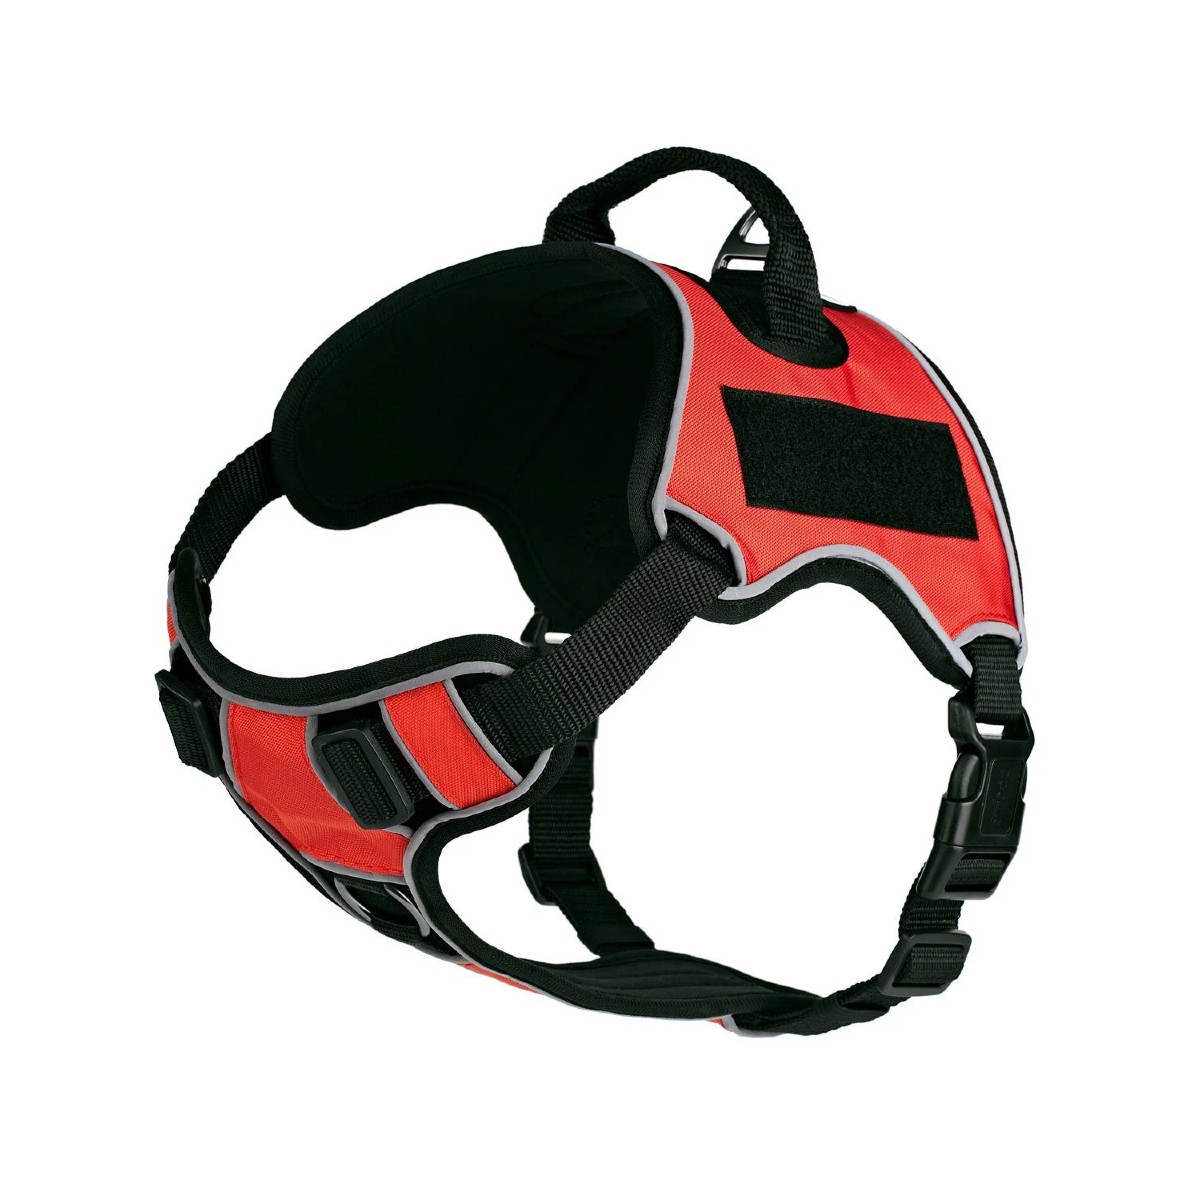 Dogline Quest Multipurpose No Pull Dog Harness - Red